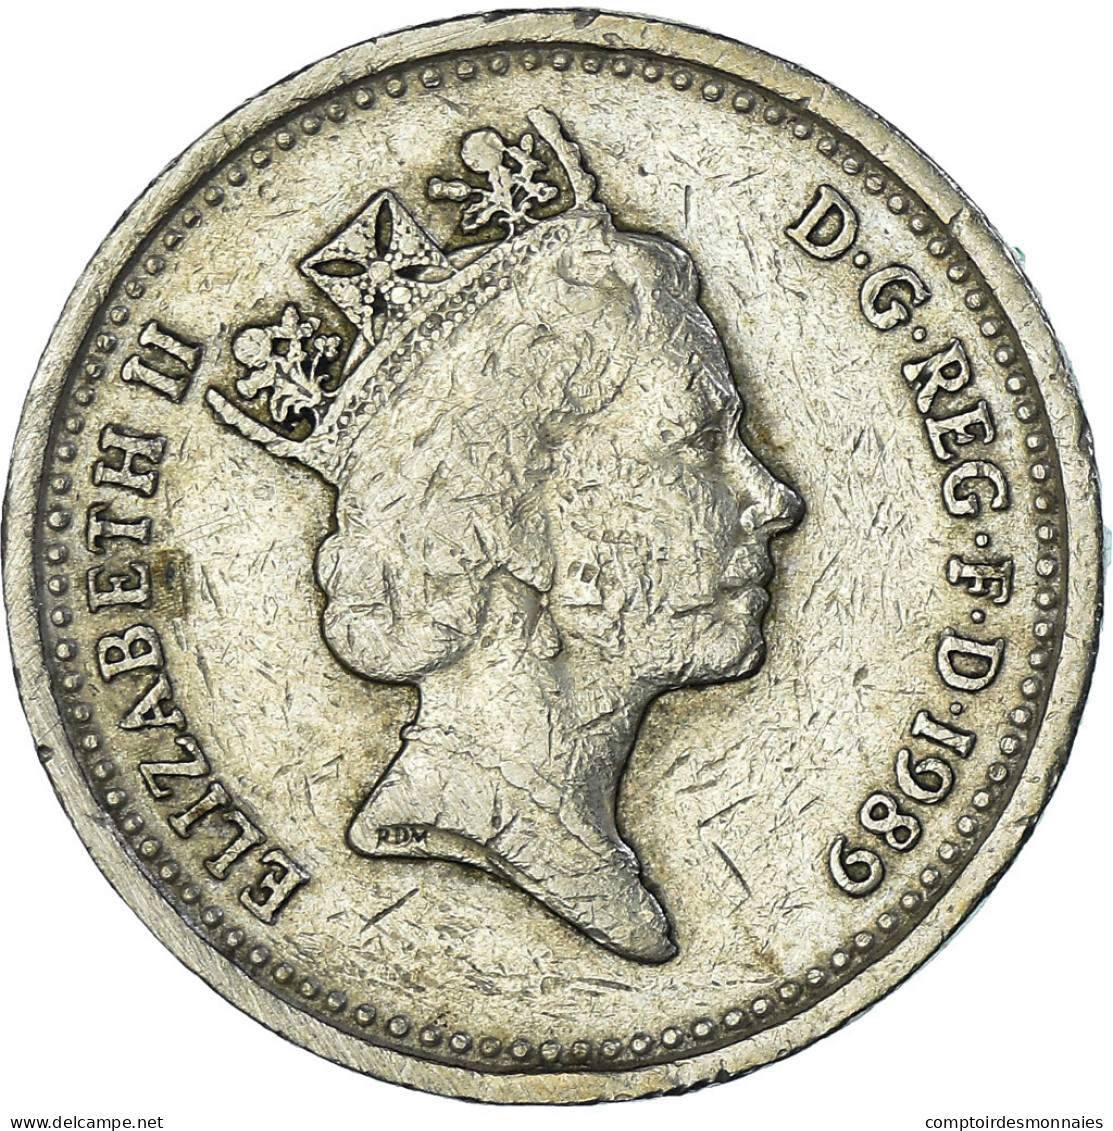 Monnaie, Grande-Bretagne, Elizabeth II, Pound, 1989, TTB, Nickel-Cuivre, KM:959 - 1 Pond